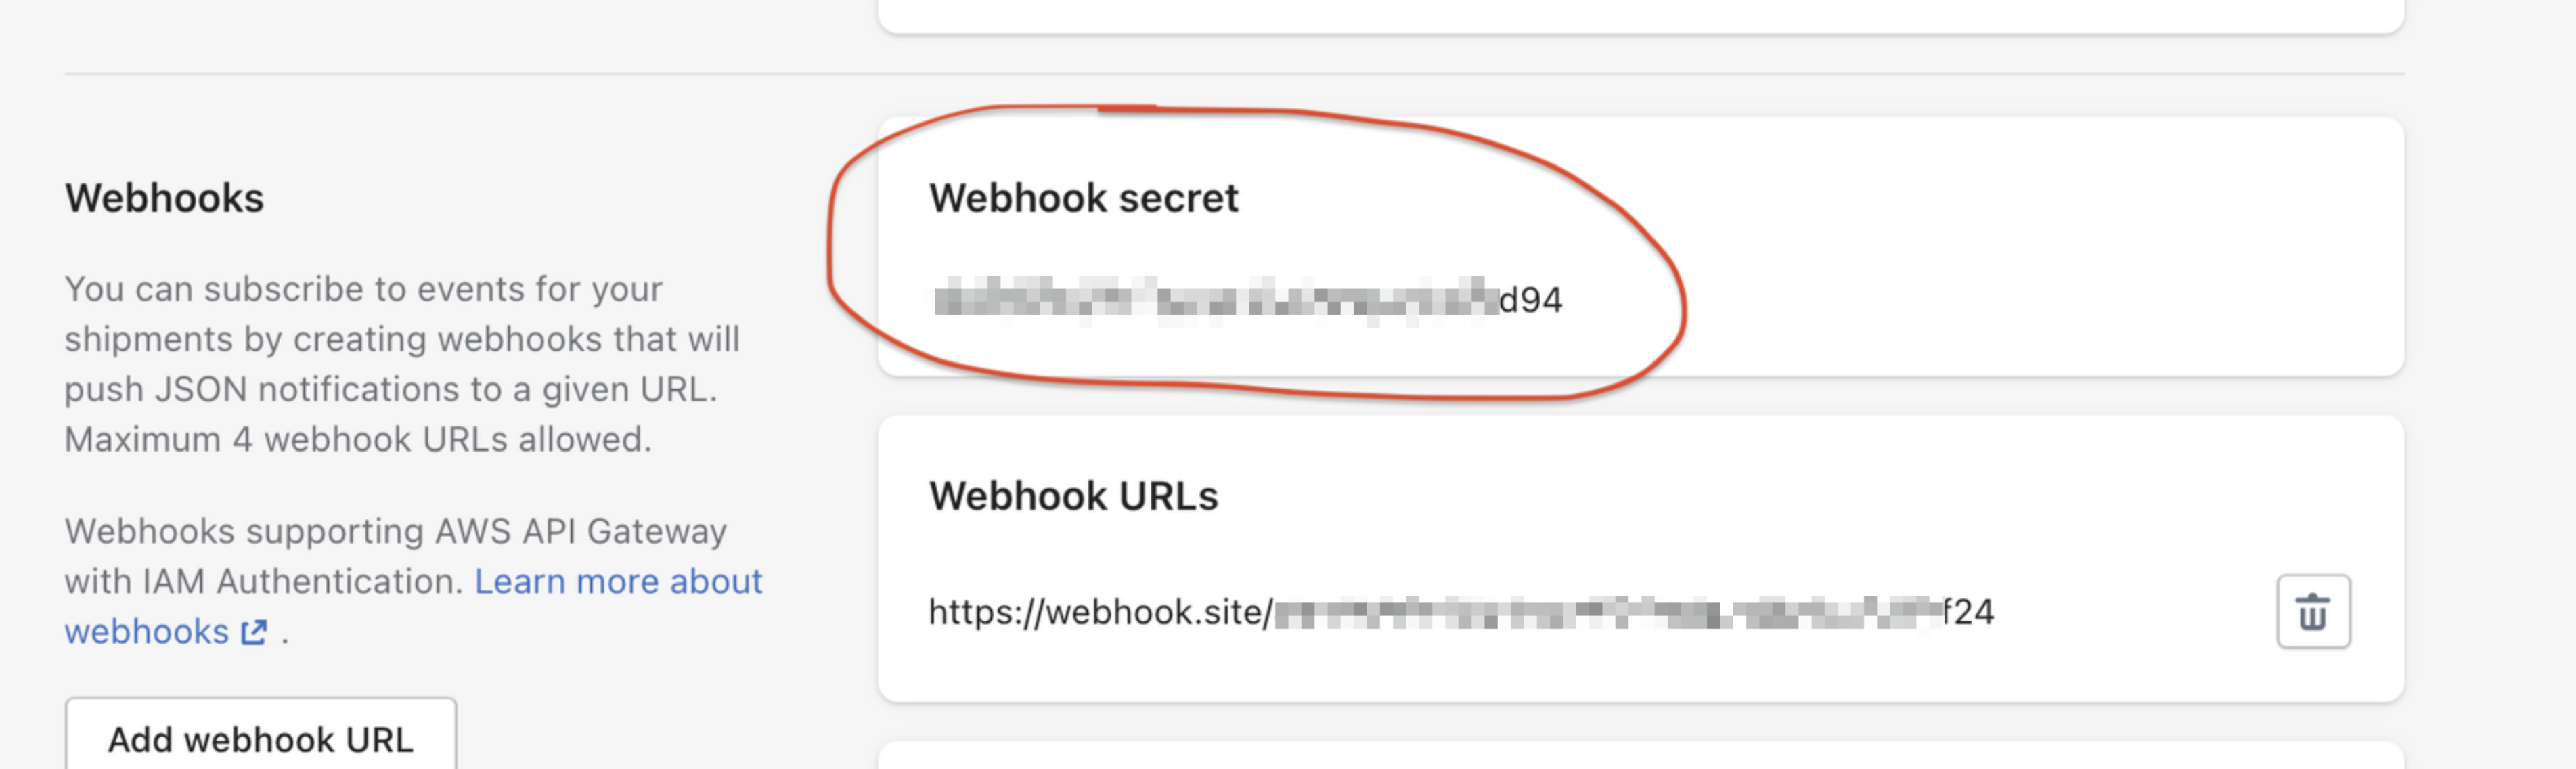 webhook-secret